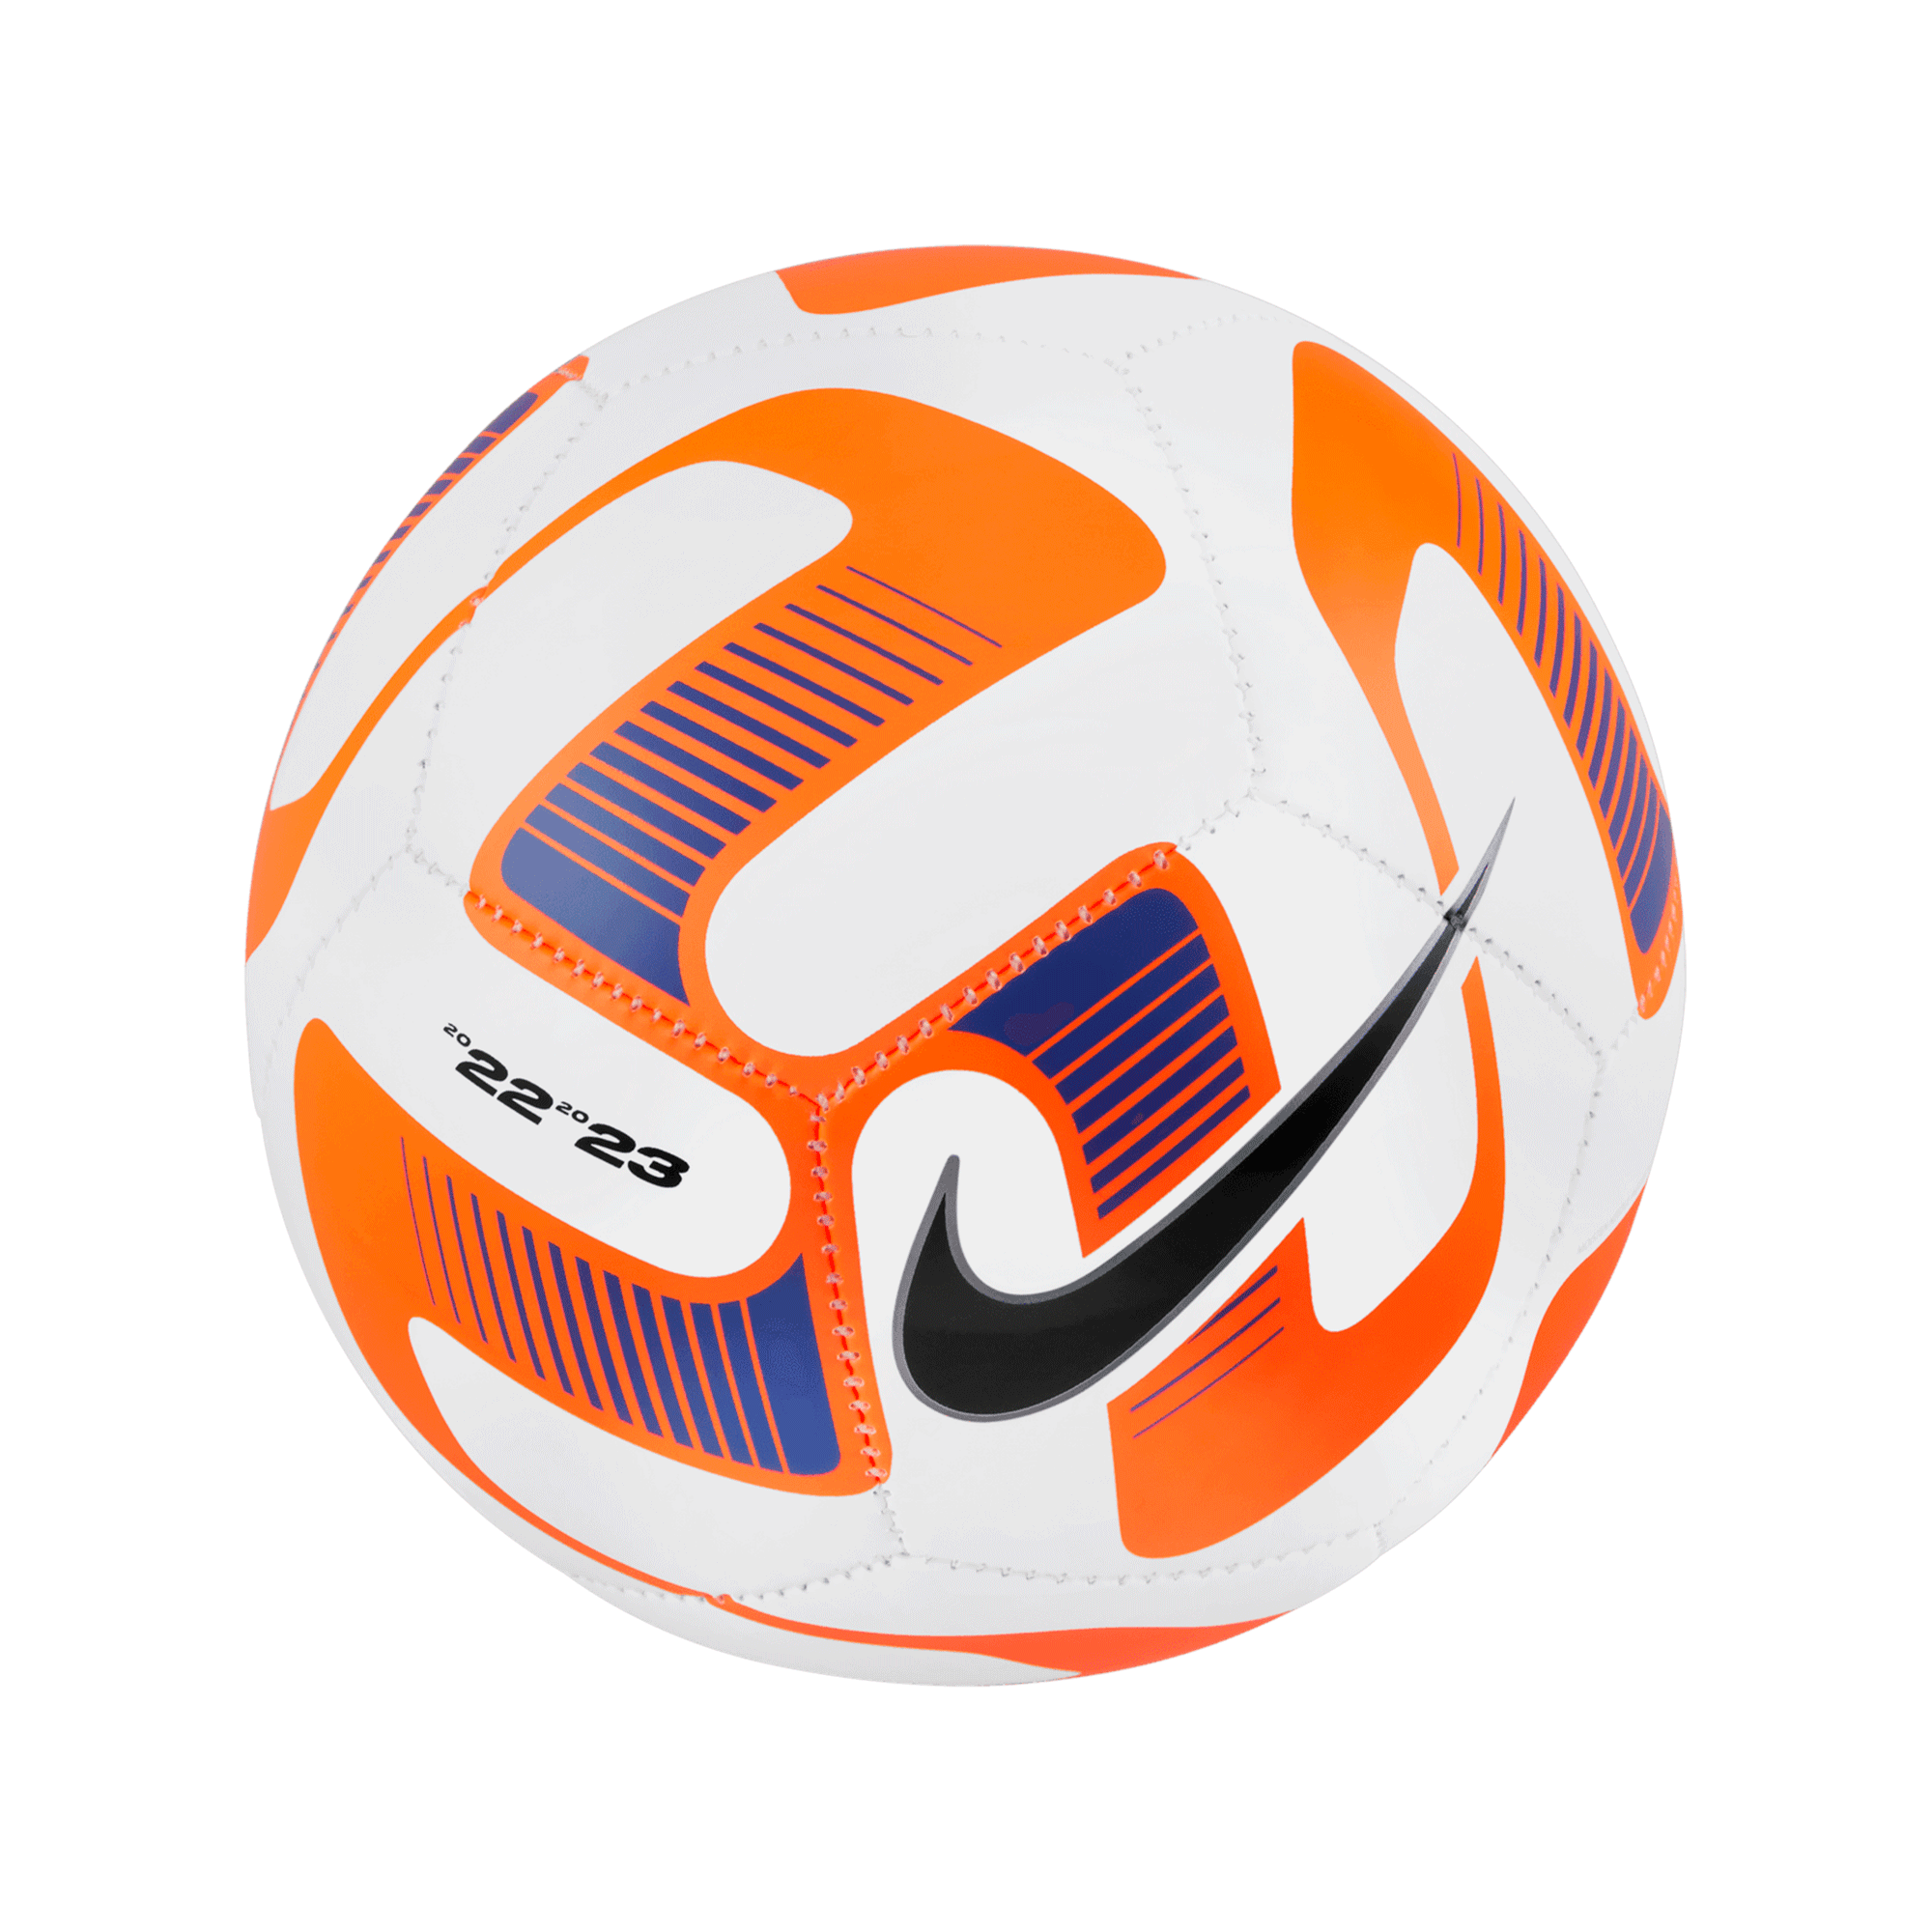 Balón Nike Futbol Skills Unisex | Martí tienda linea - Martí MX